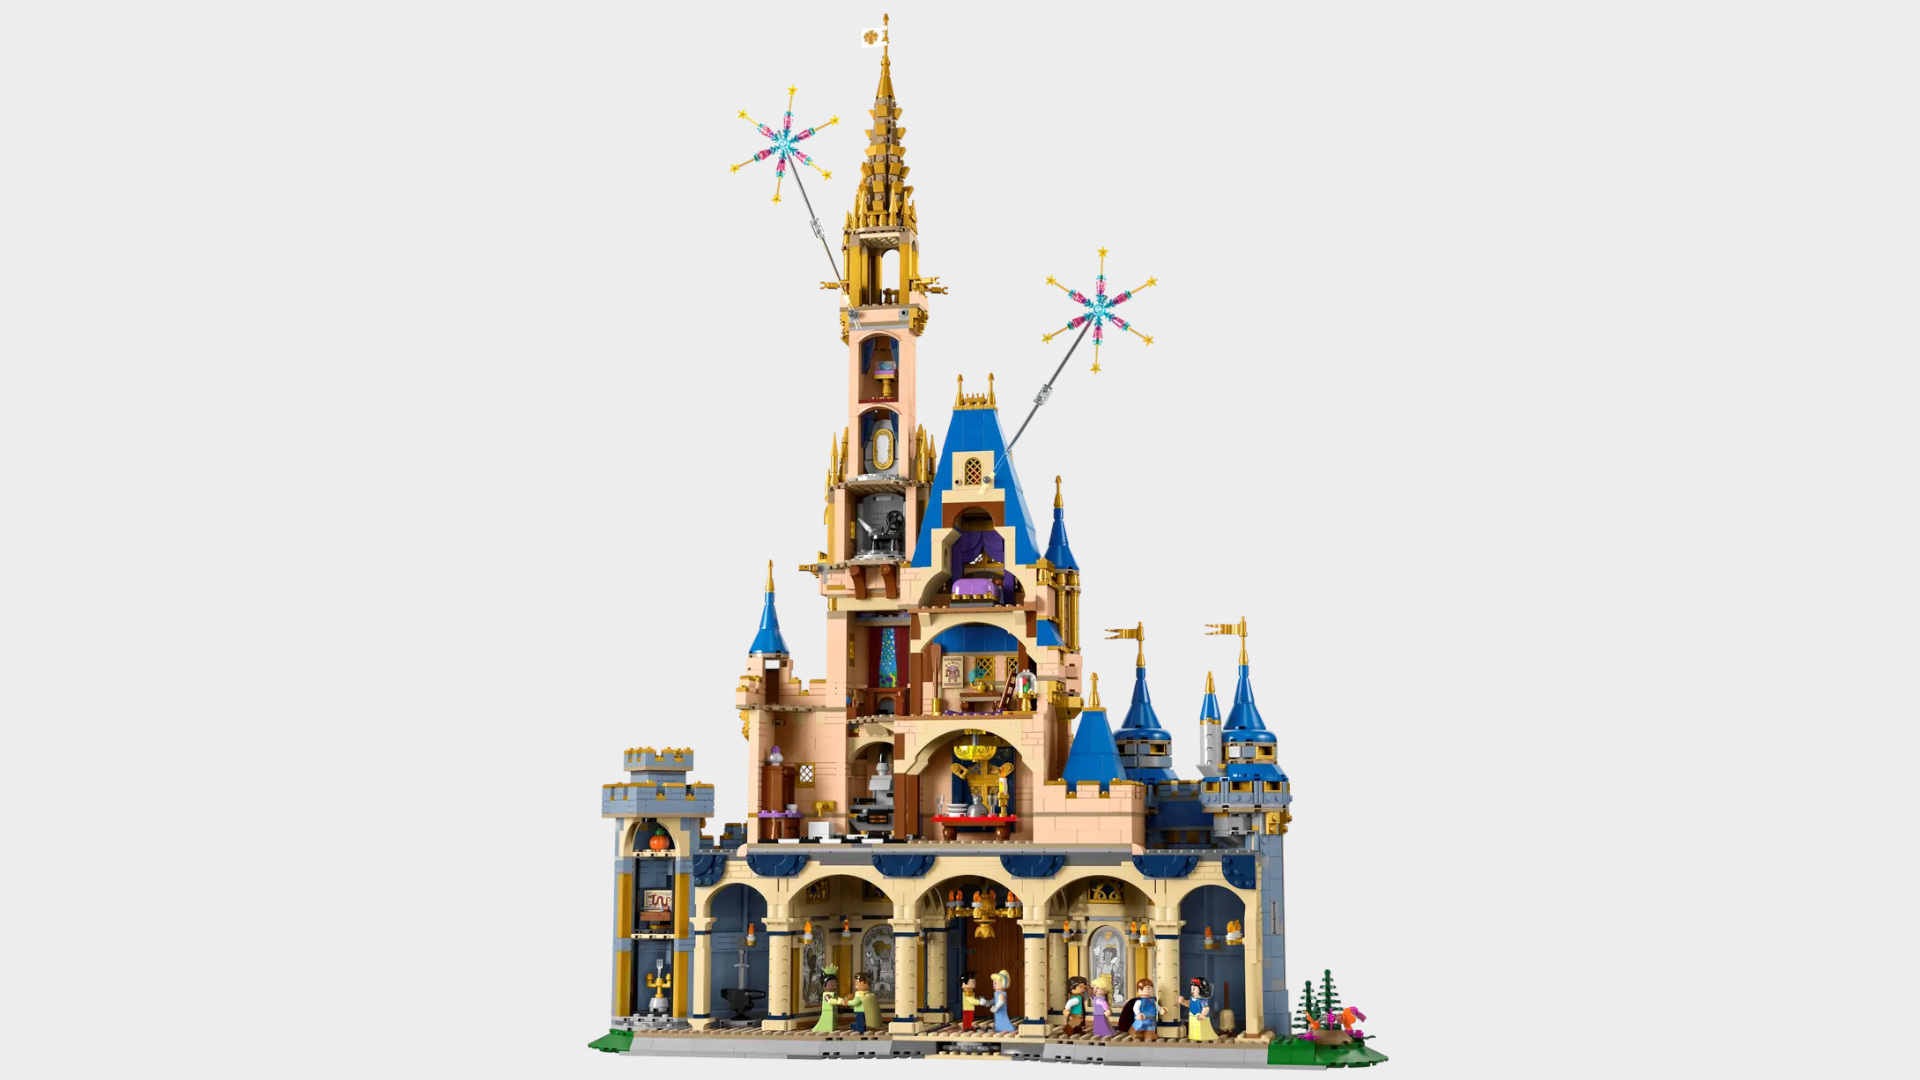 Lego Disney Castle on a plain background